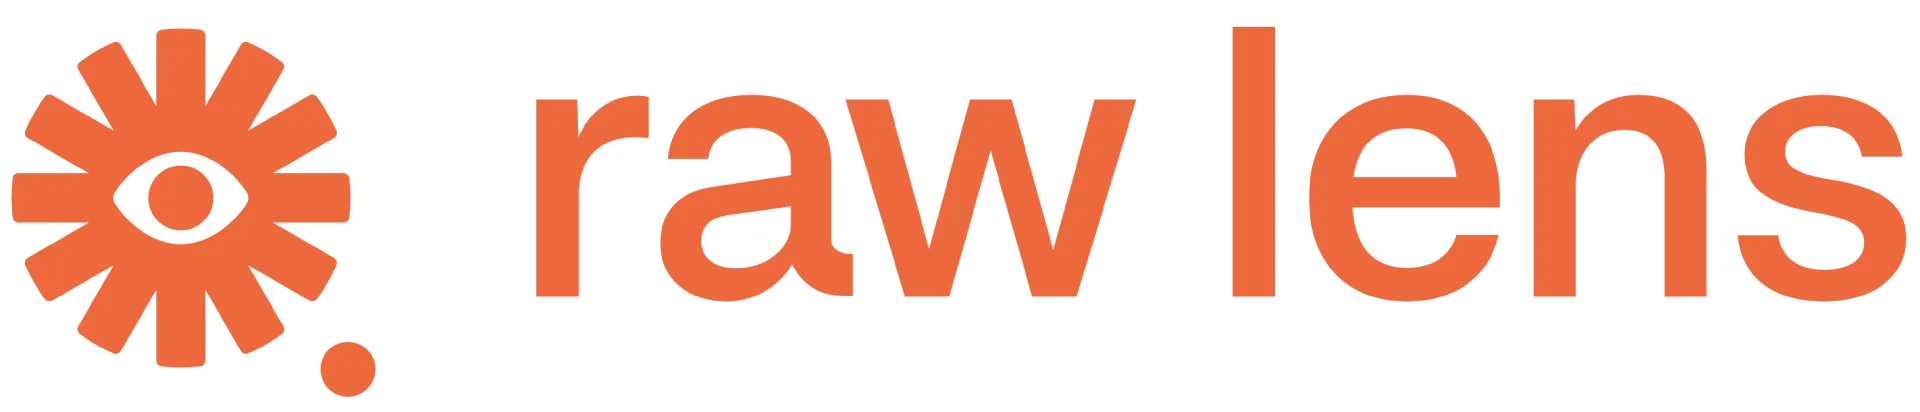 Raw Lens - Logo